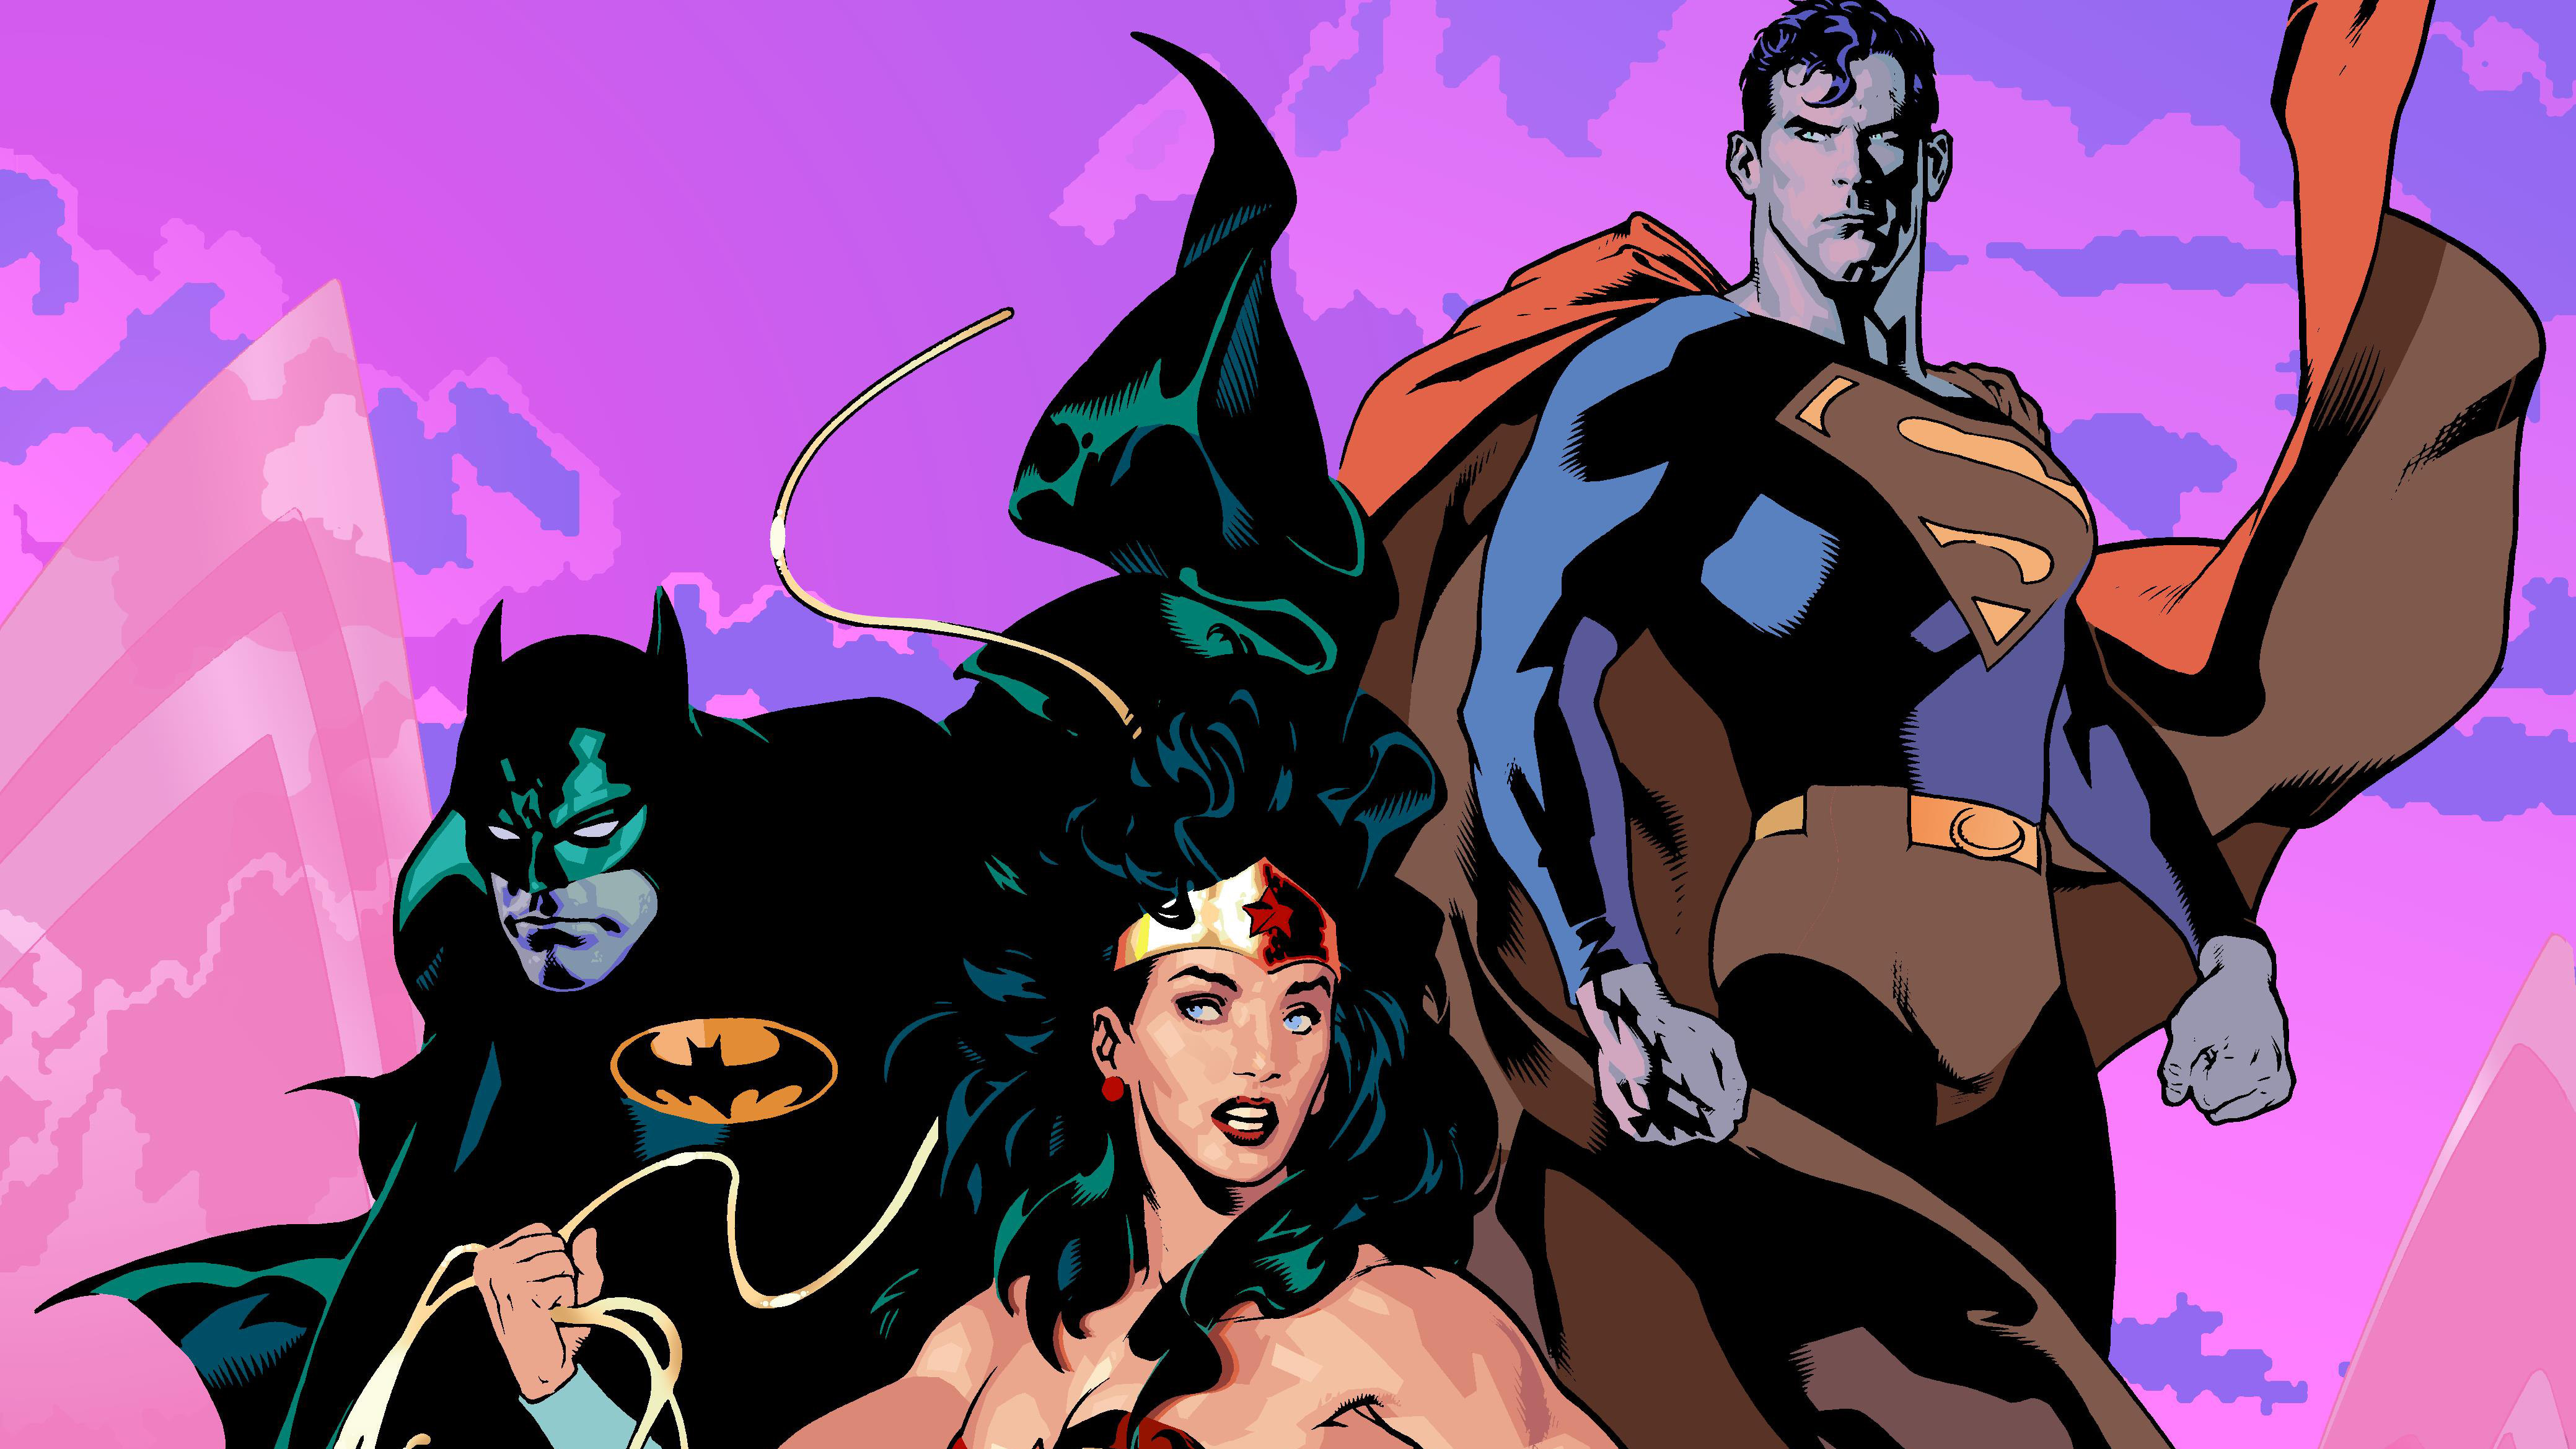 Лига справедливости комикс. Бэтмен чудо женщина слияние арт. Обои на телефон Супергерои чудо женщина.